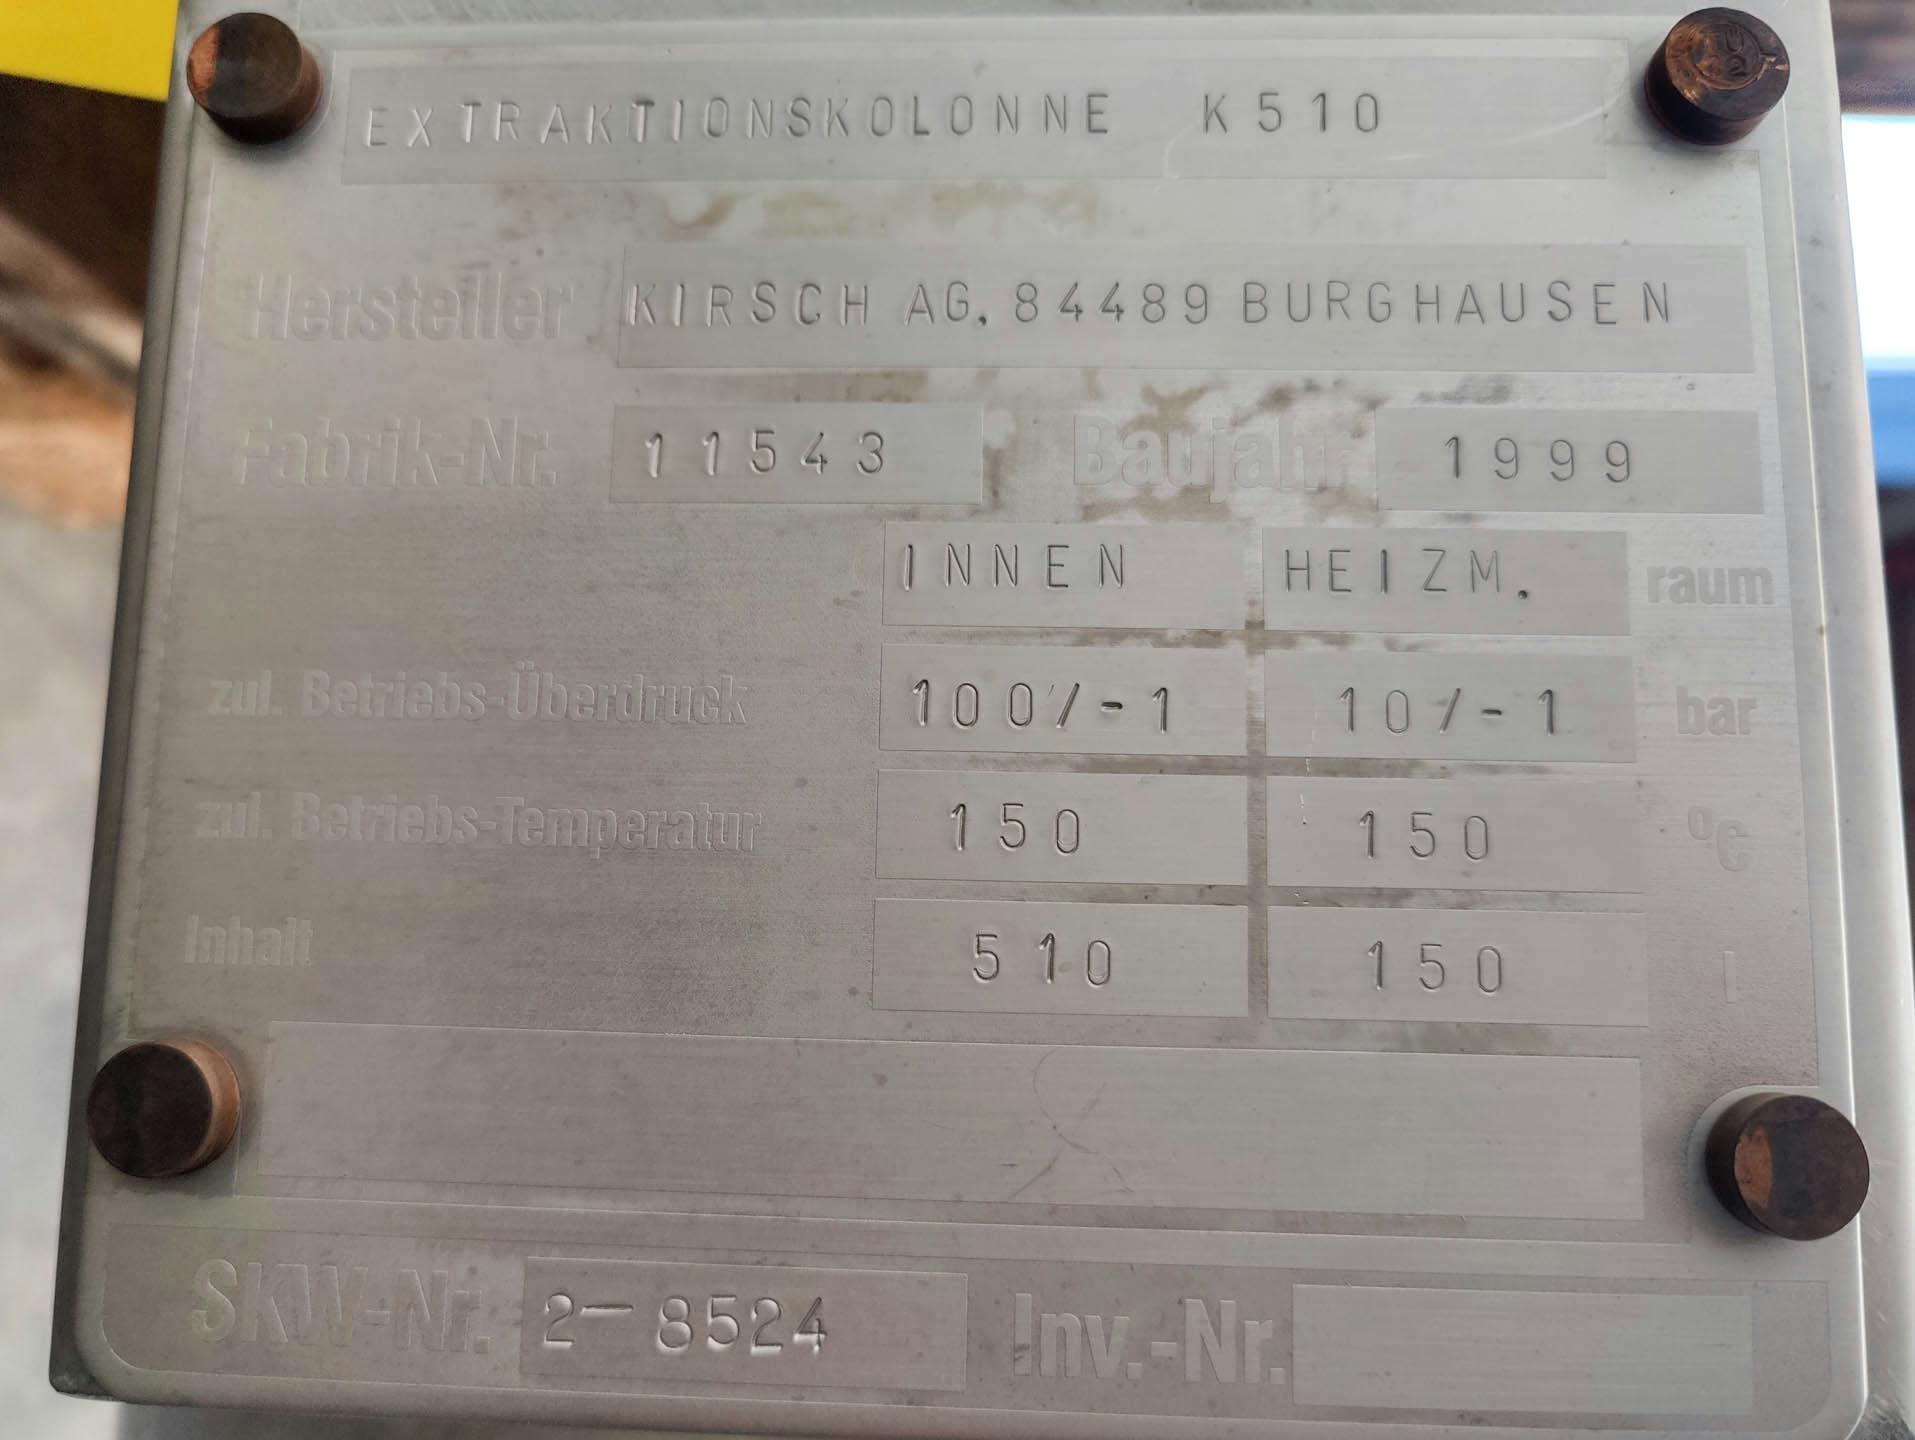 Kirsch AG Burghausen Column - Extraktionsgeräte - image 7